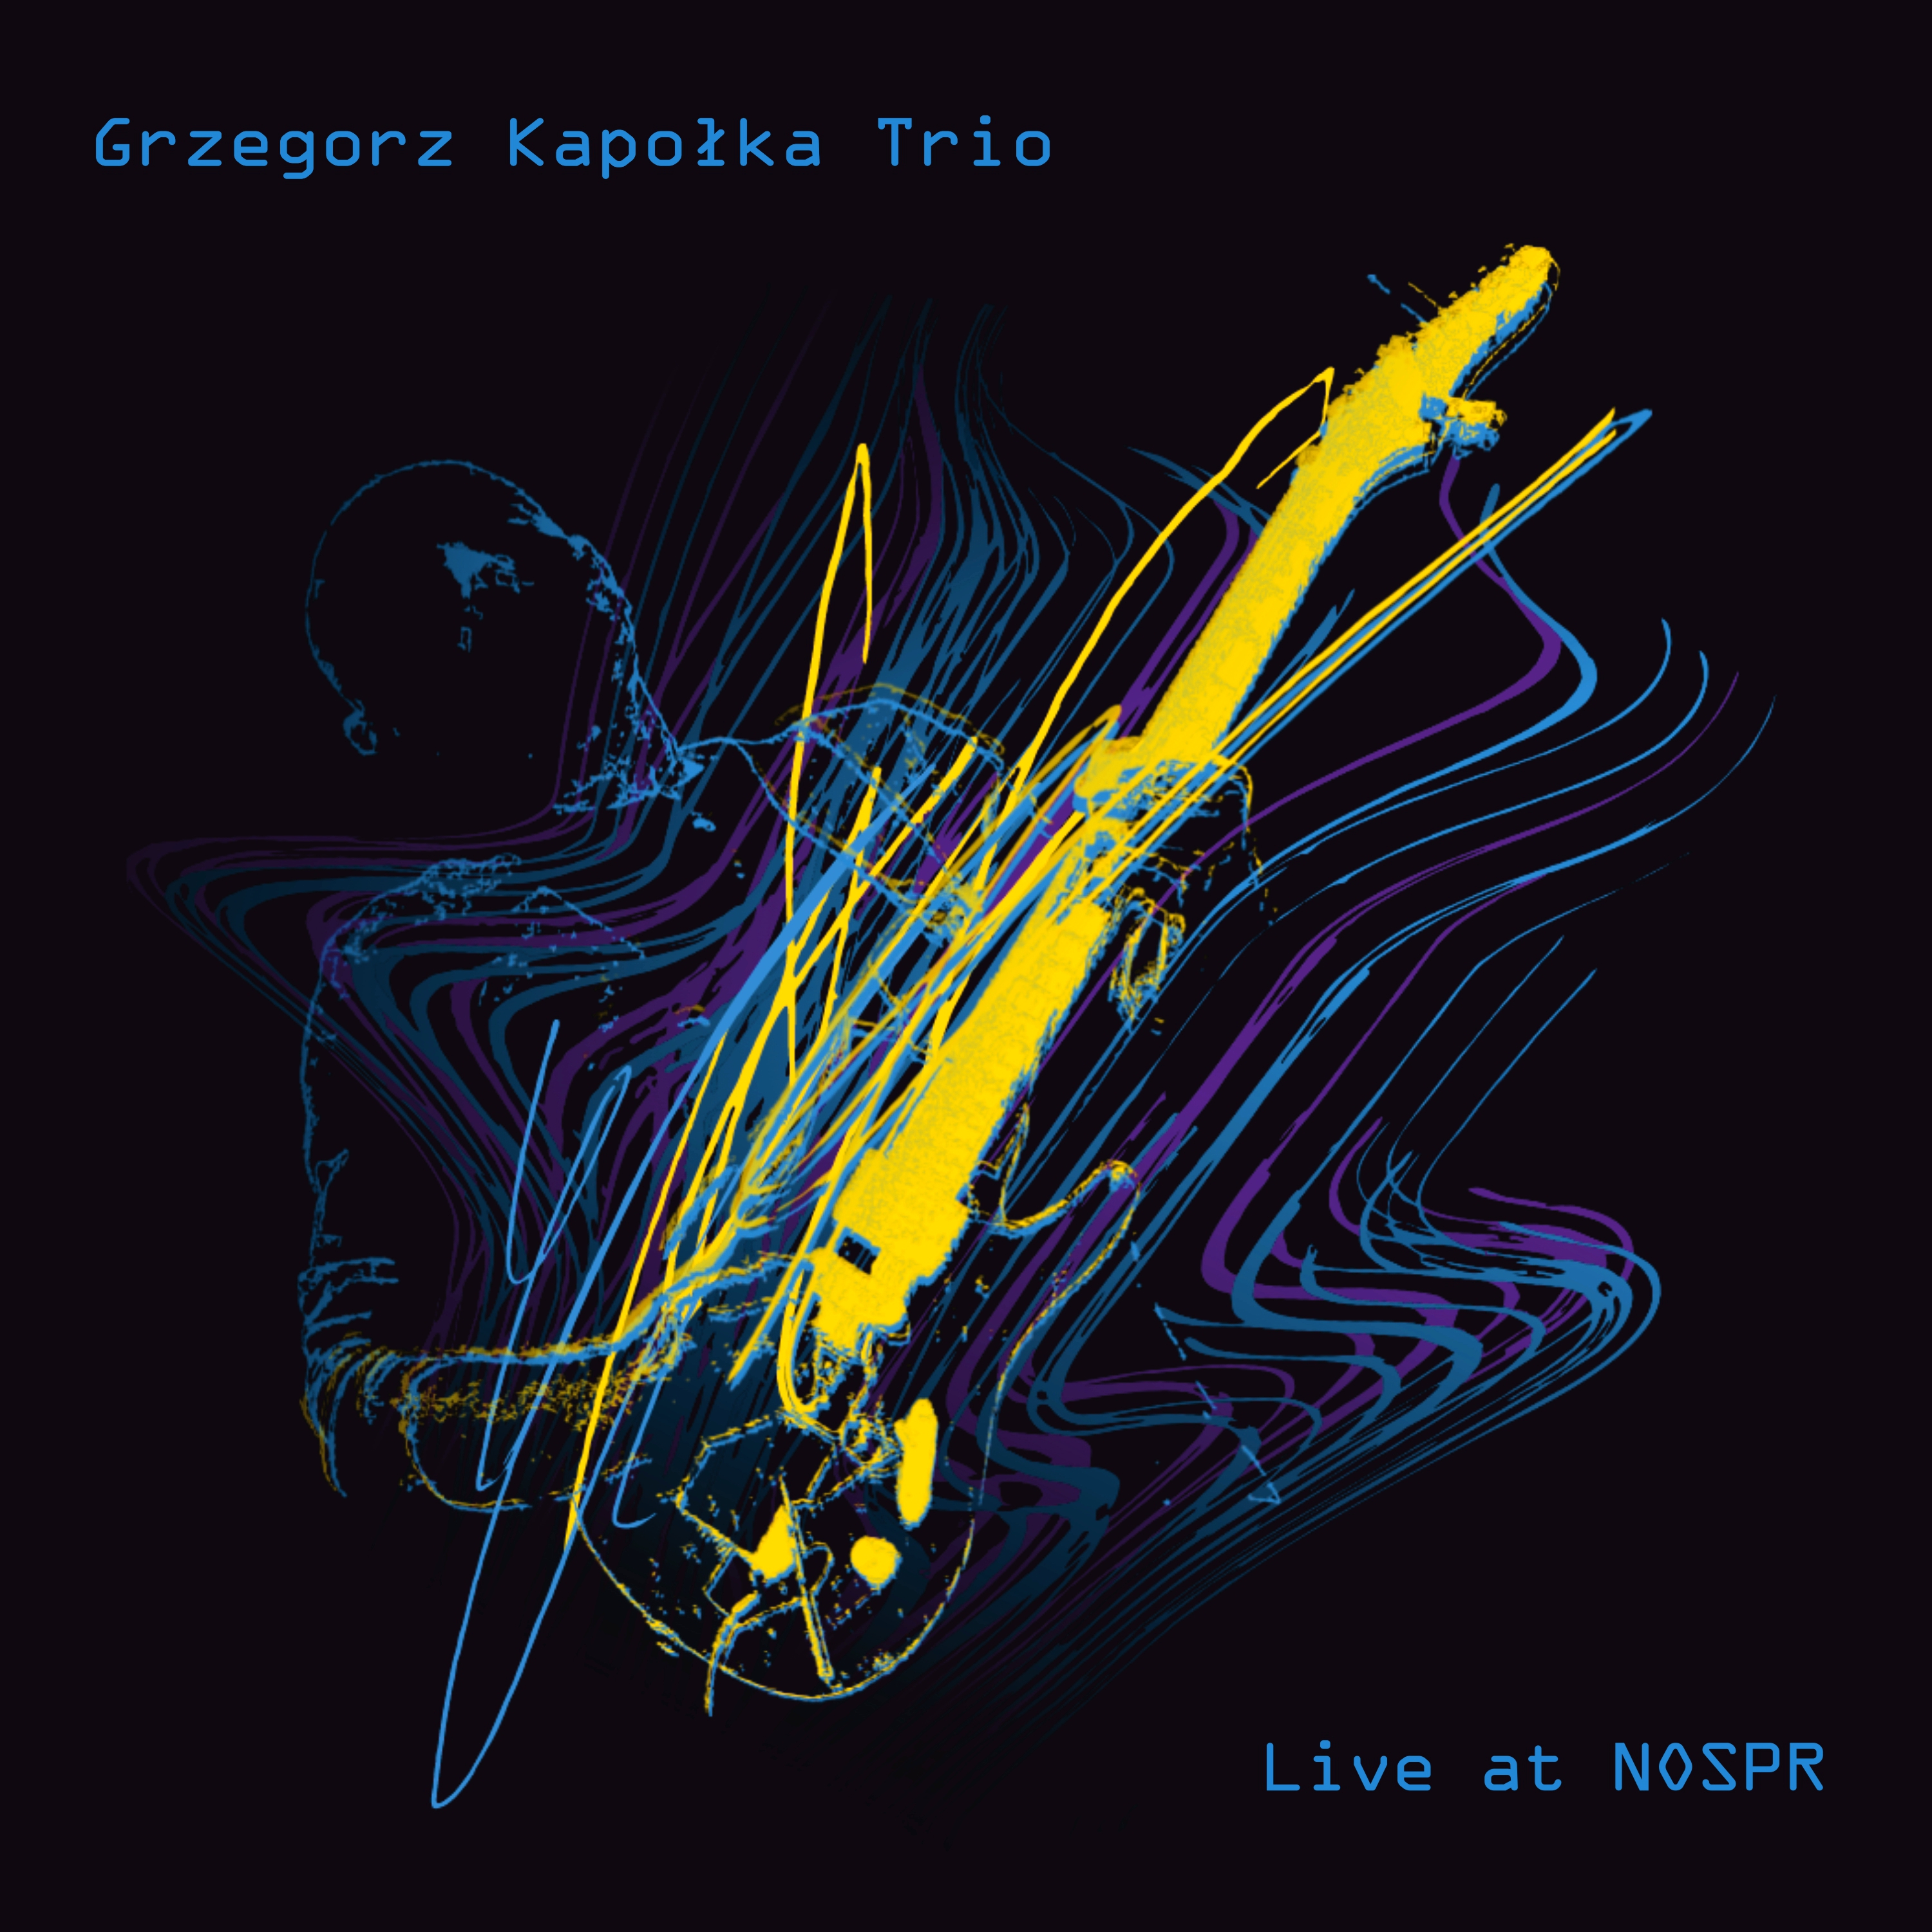 Grzegorz Kapołka Trio - Live at NOSPR